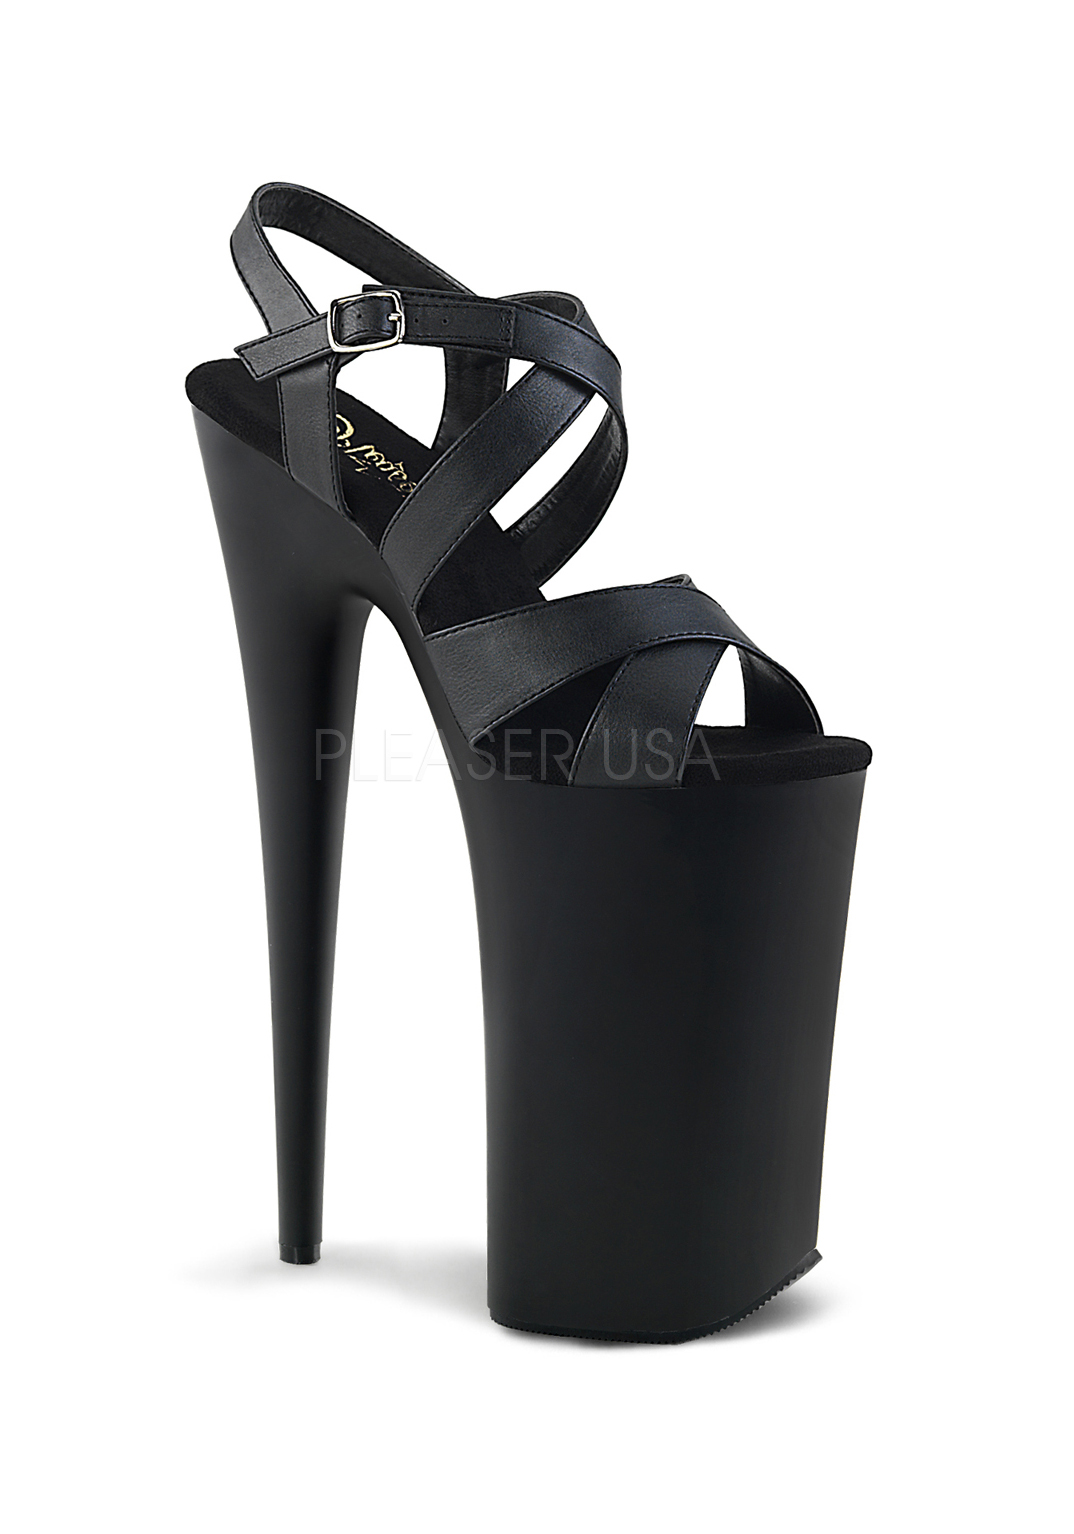 10 inch platform heels